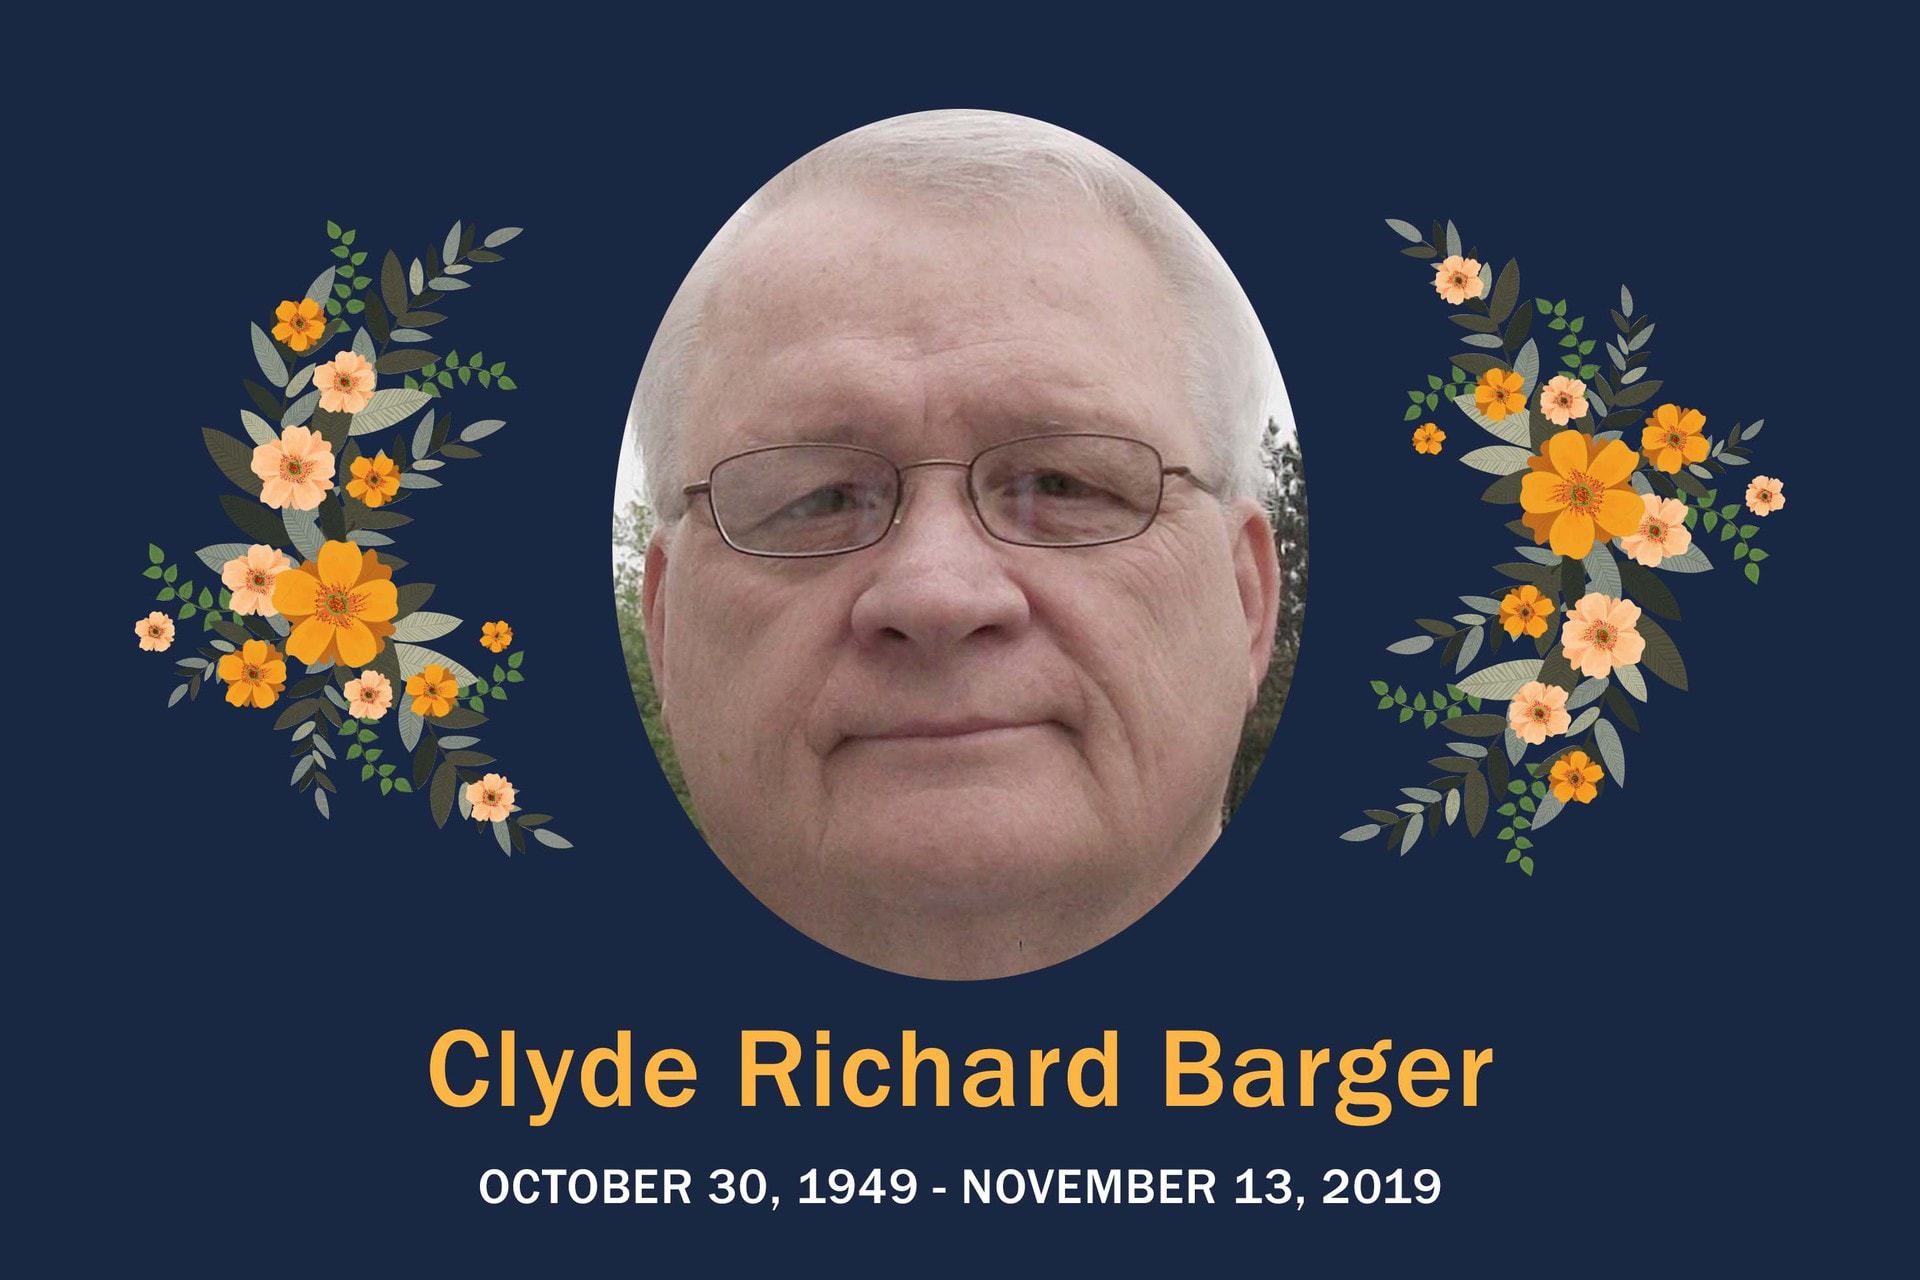 Clyde Richard Barger